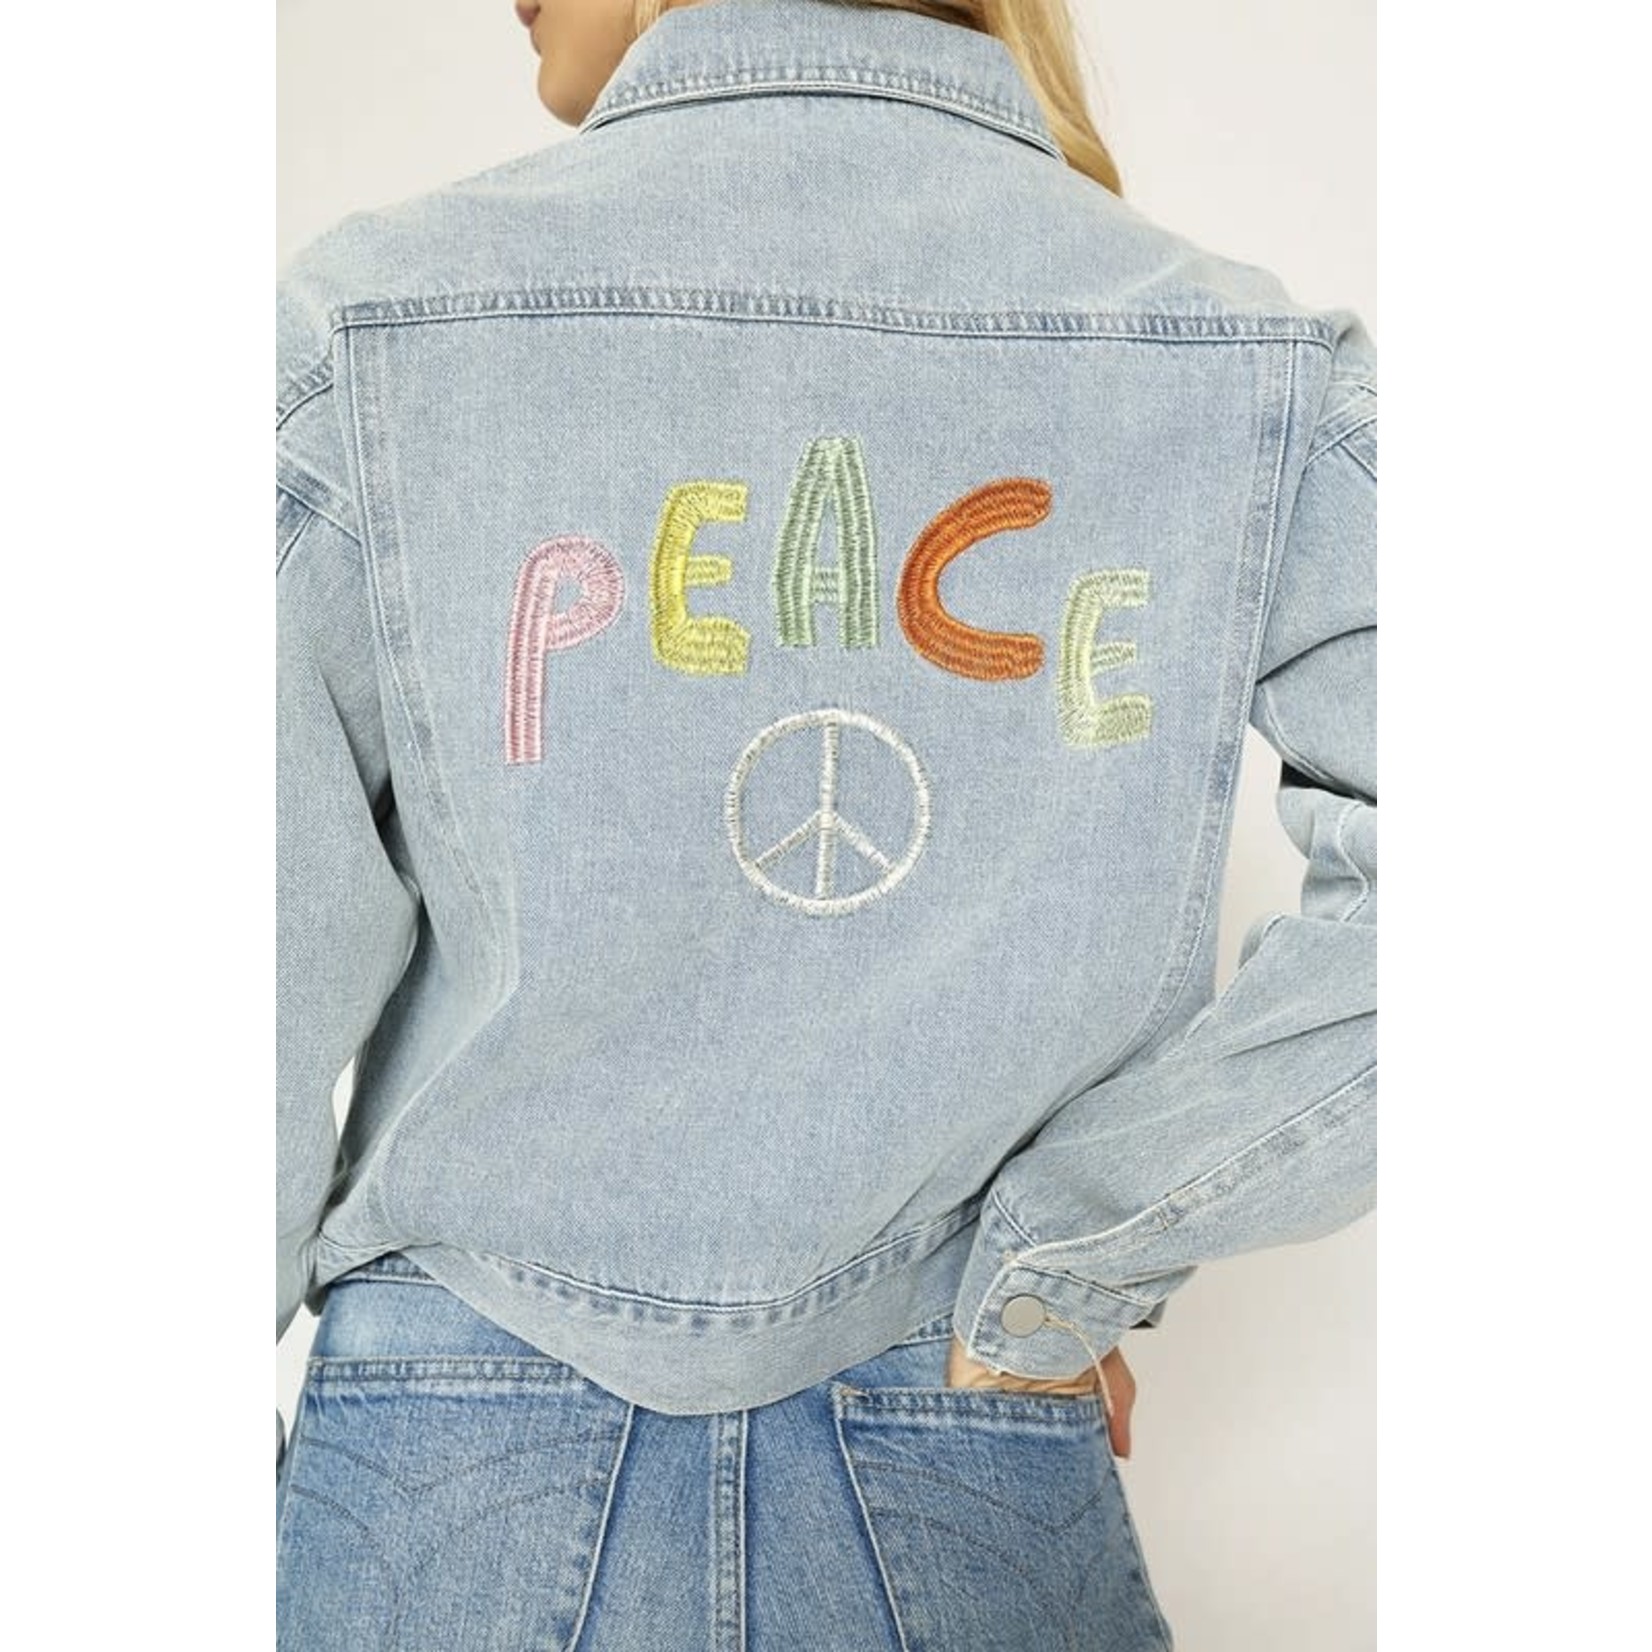 Miss Sparkling Peace Embroidered Denim Jacket